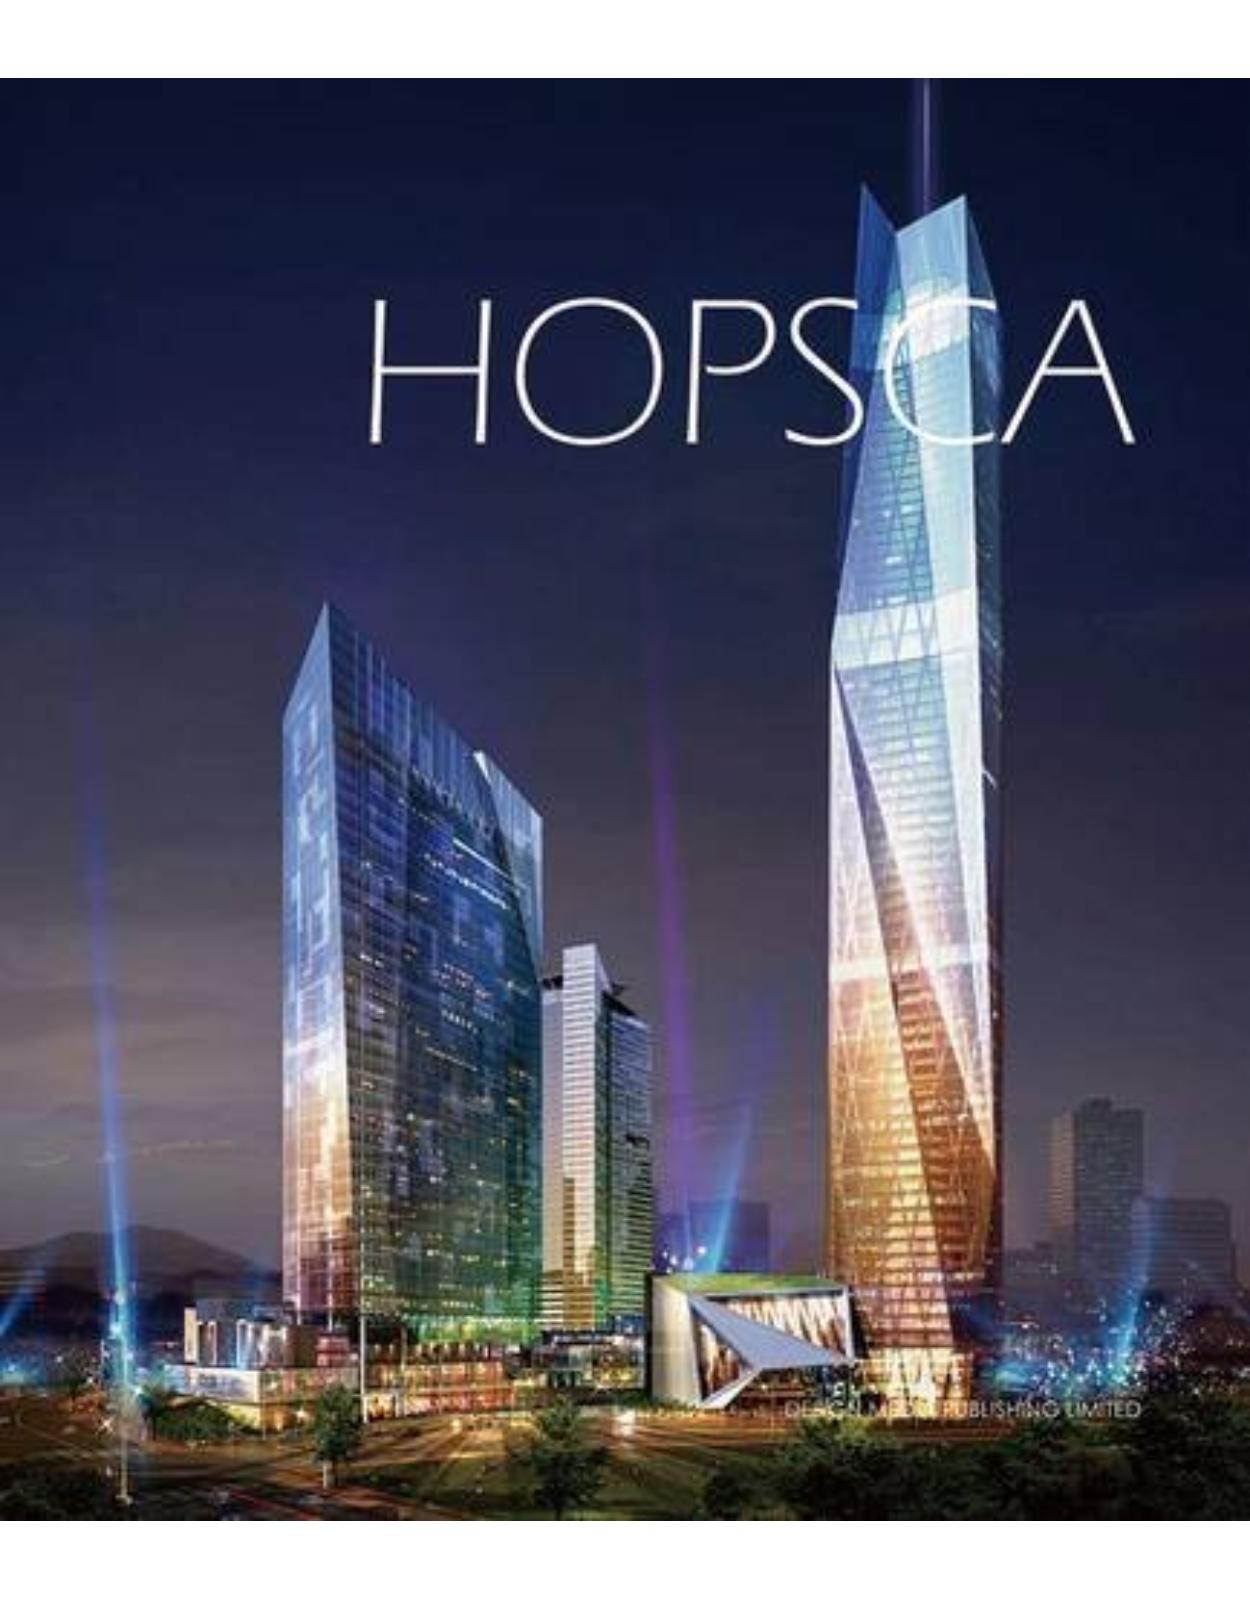 HOPSCA Design Proposals